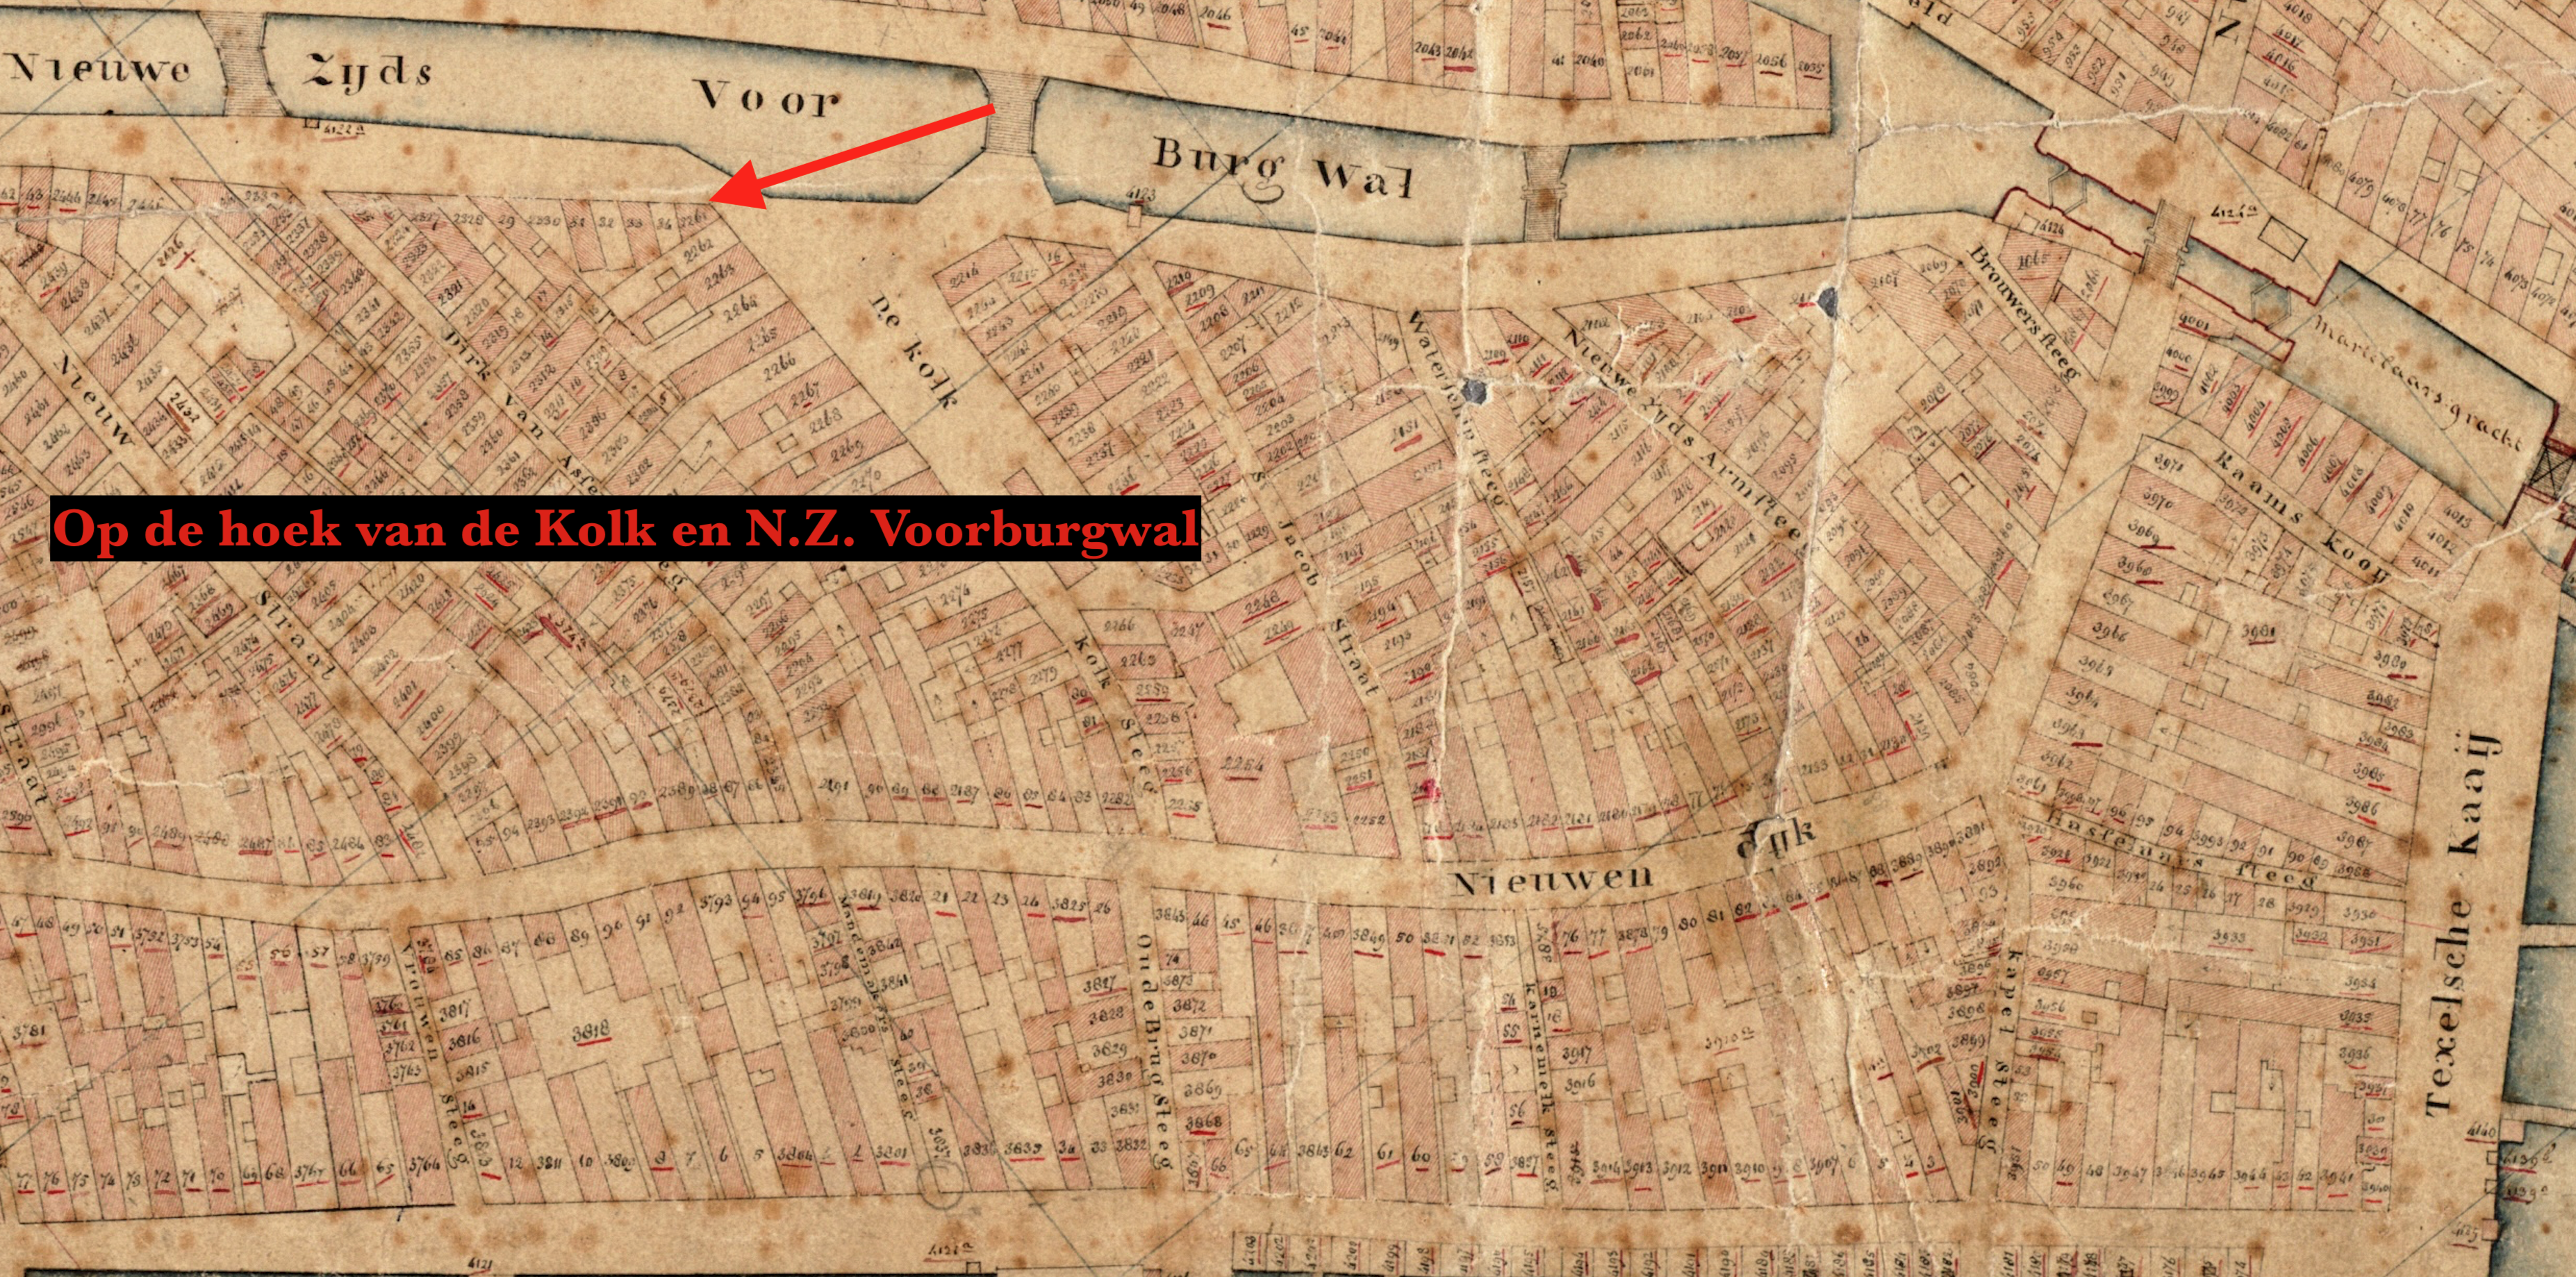 1781 • Op de hoek van de Kolk en N.Z. Voorburgwal